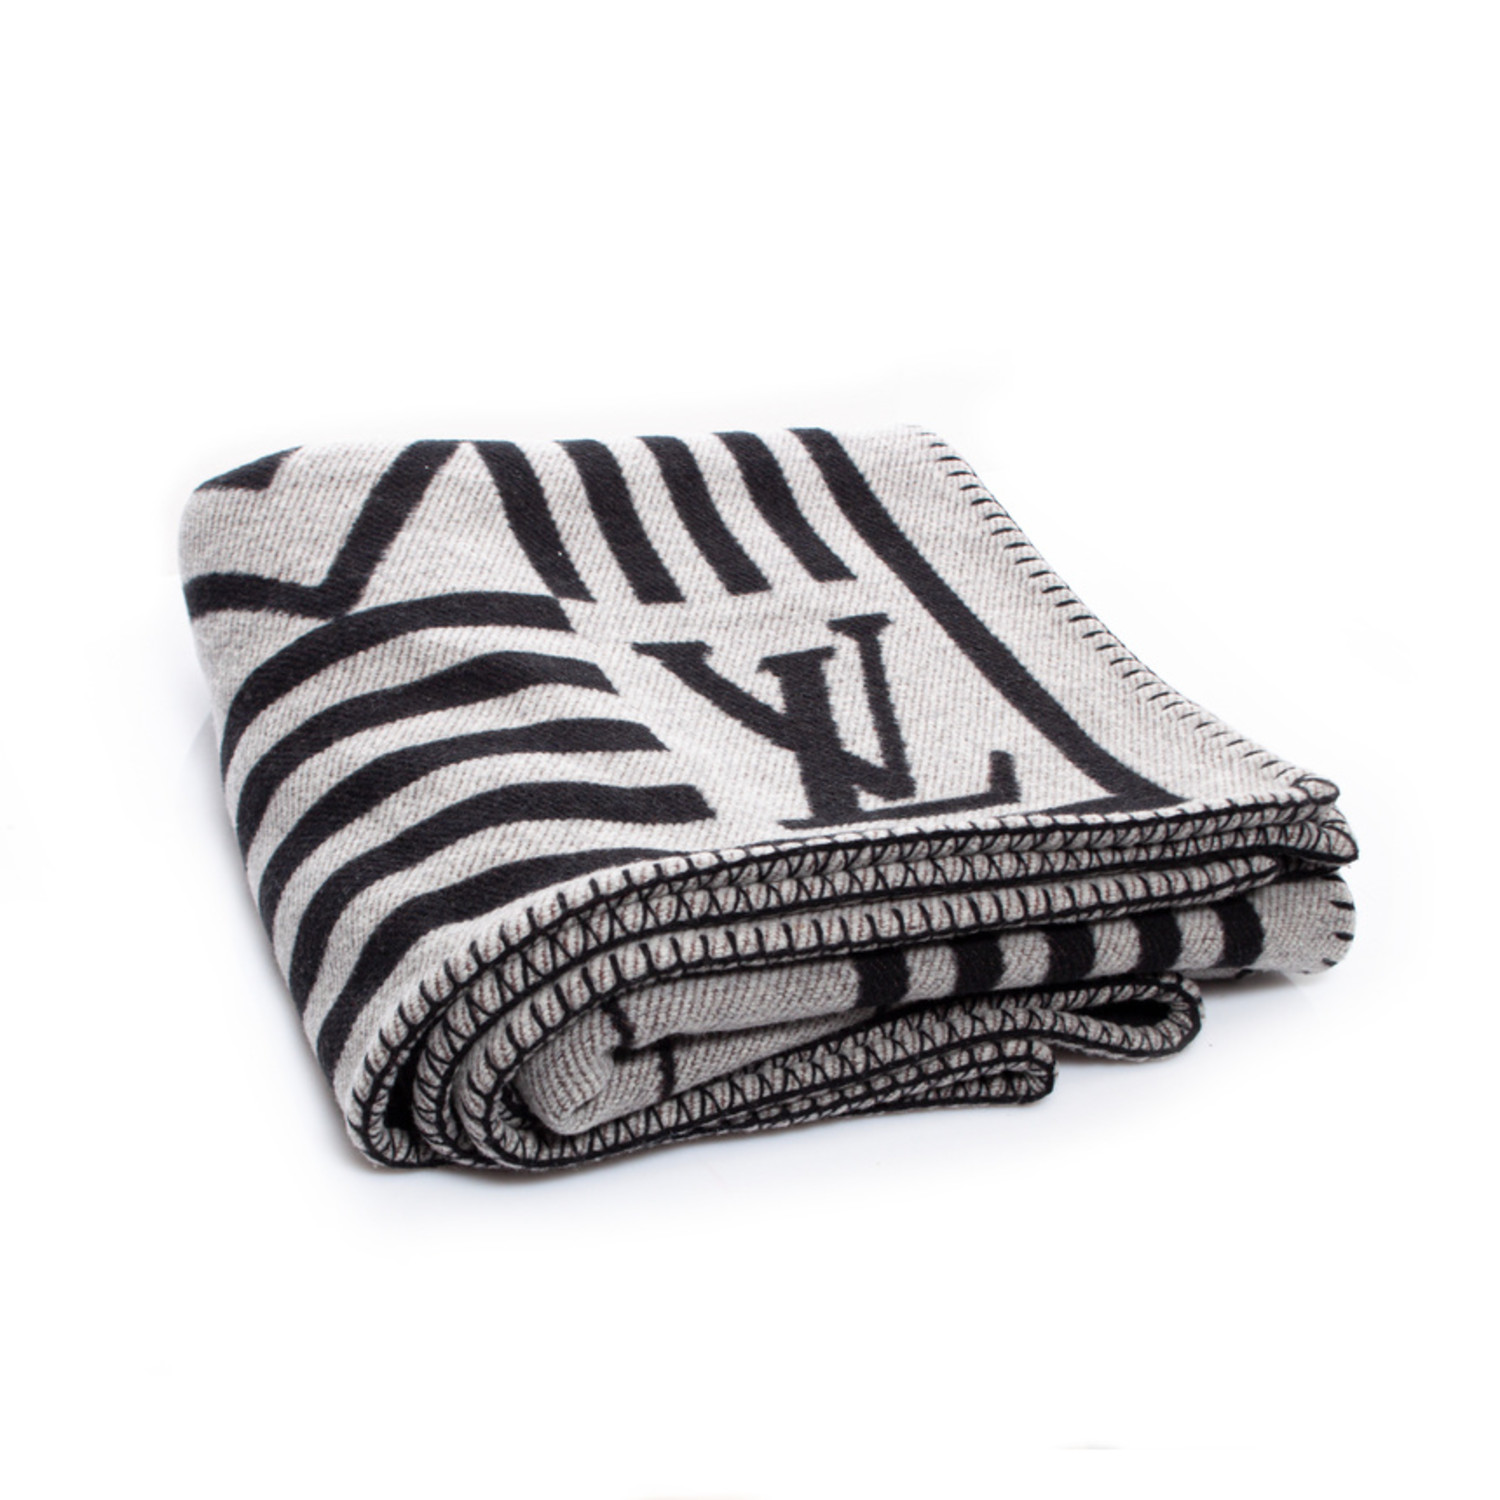 Louis Vuitton Karakoram Blanket - Grey Throws, Pillows & Throws